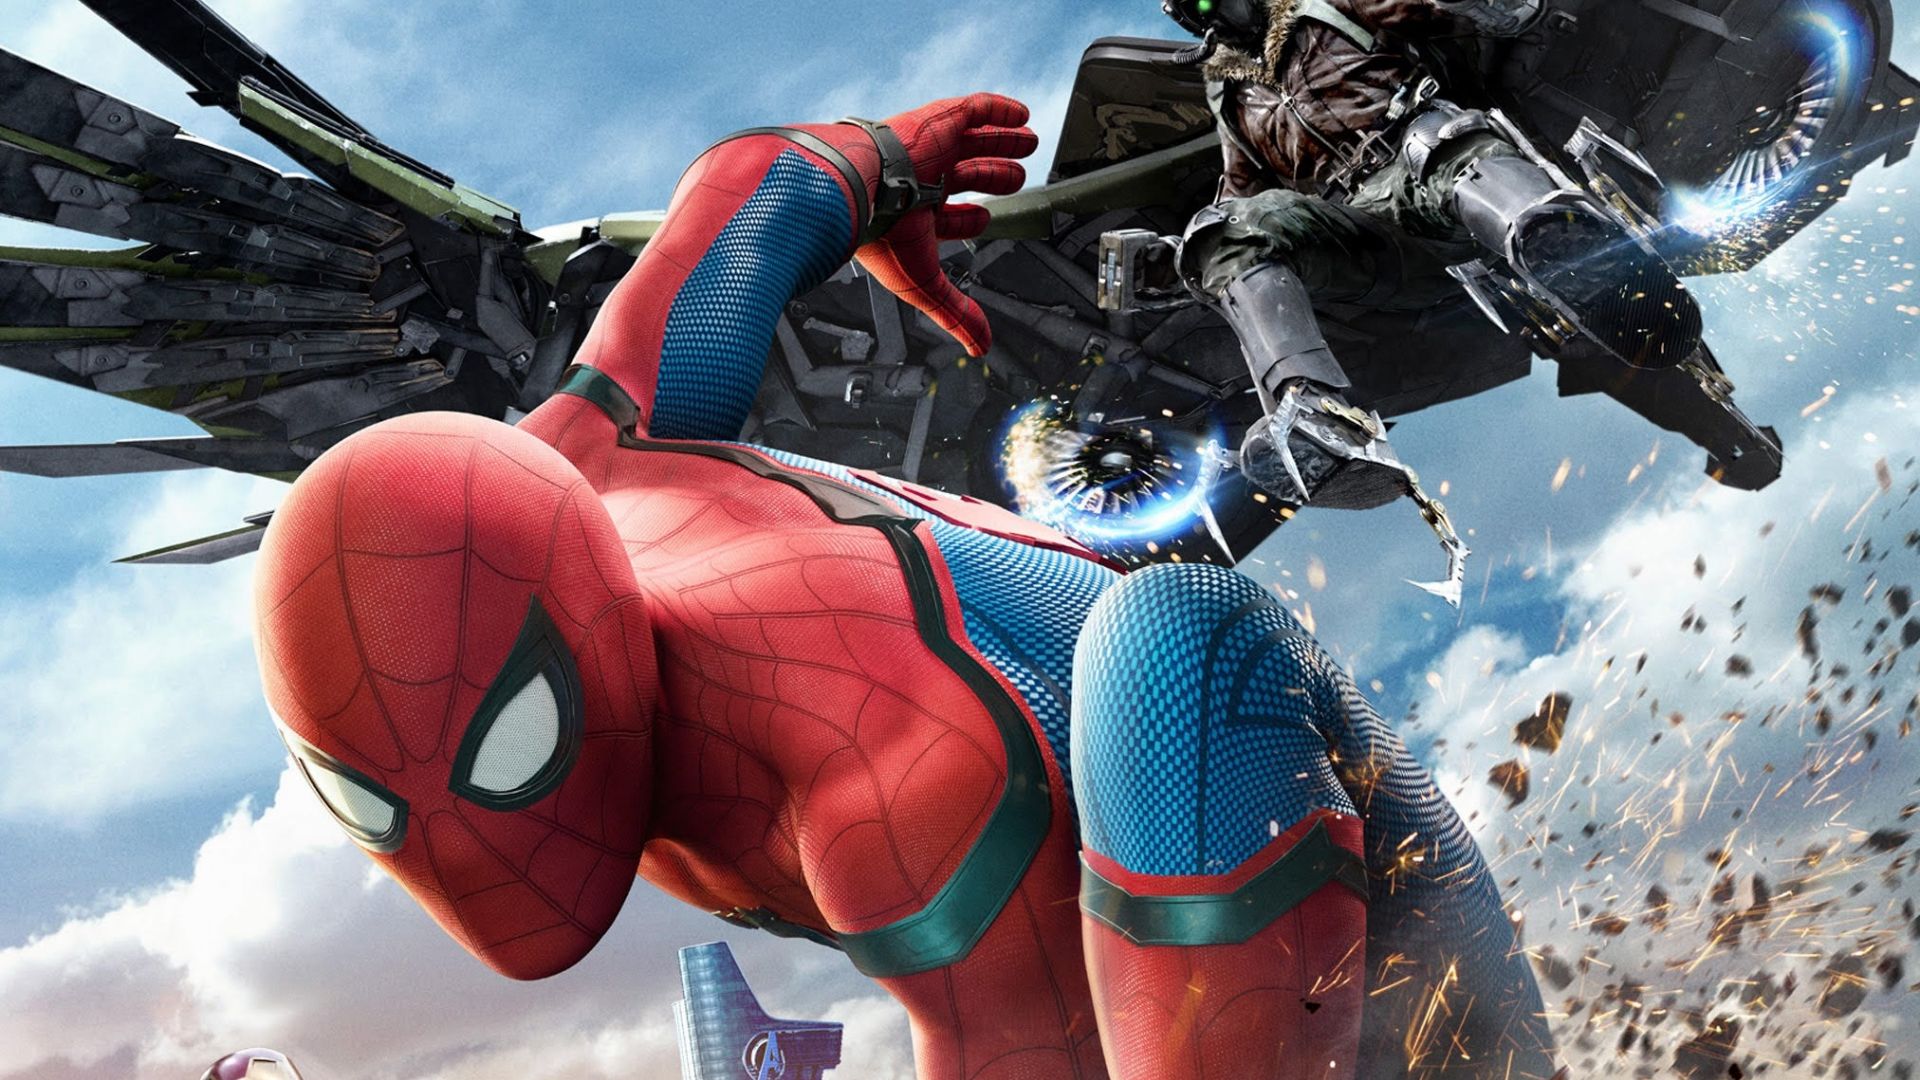 Desktop Wallpaper Spider Man: Homecoming, Iron Man, Movie Poster, Hd Image,  Picture, Background, Rfjwtp